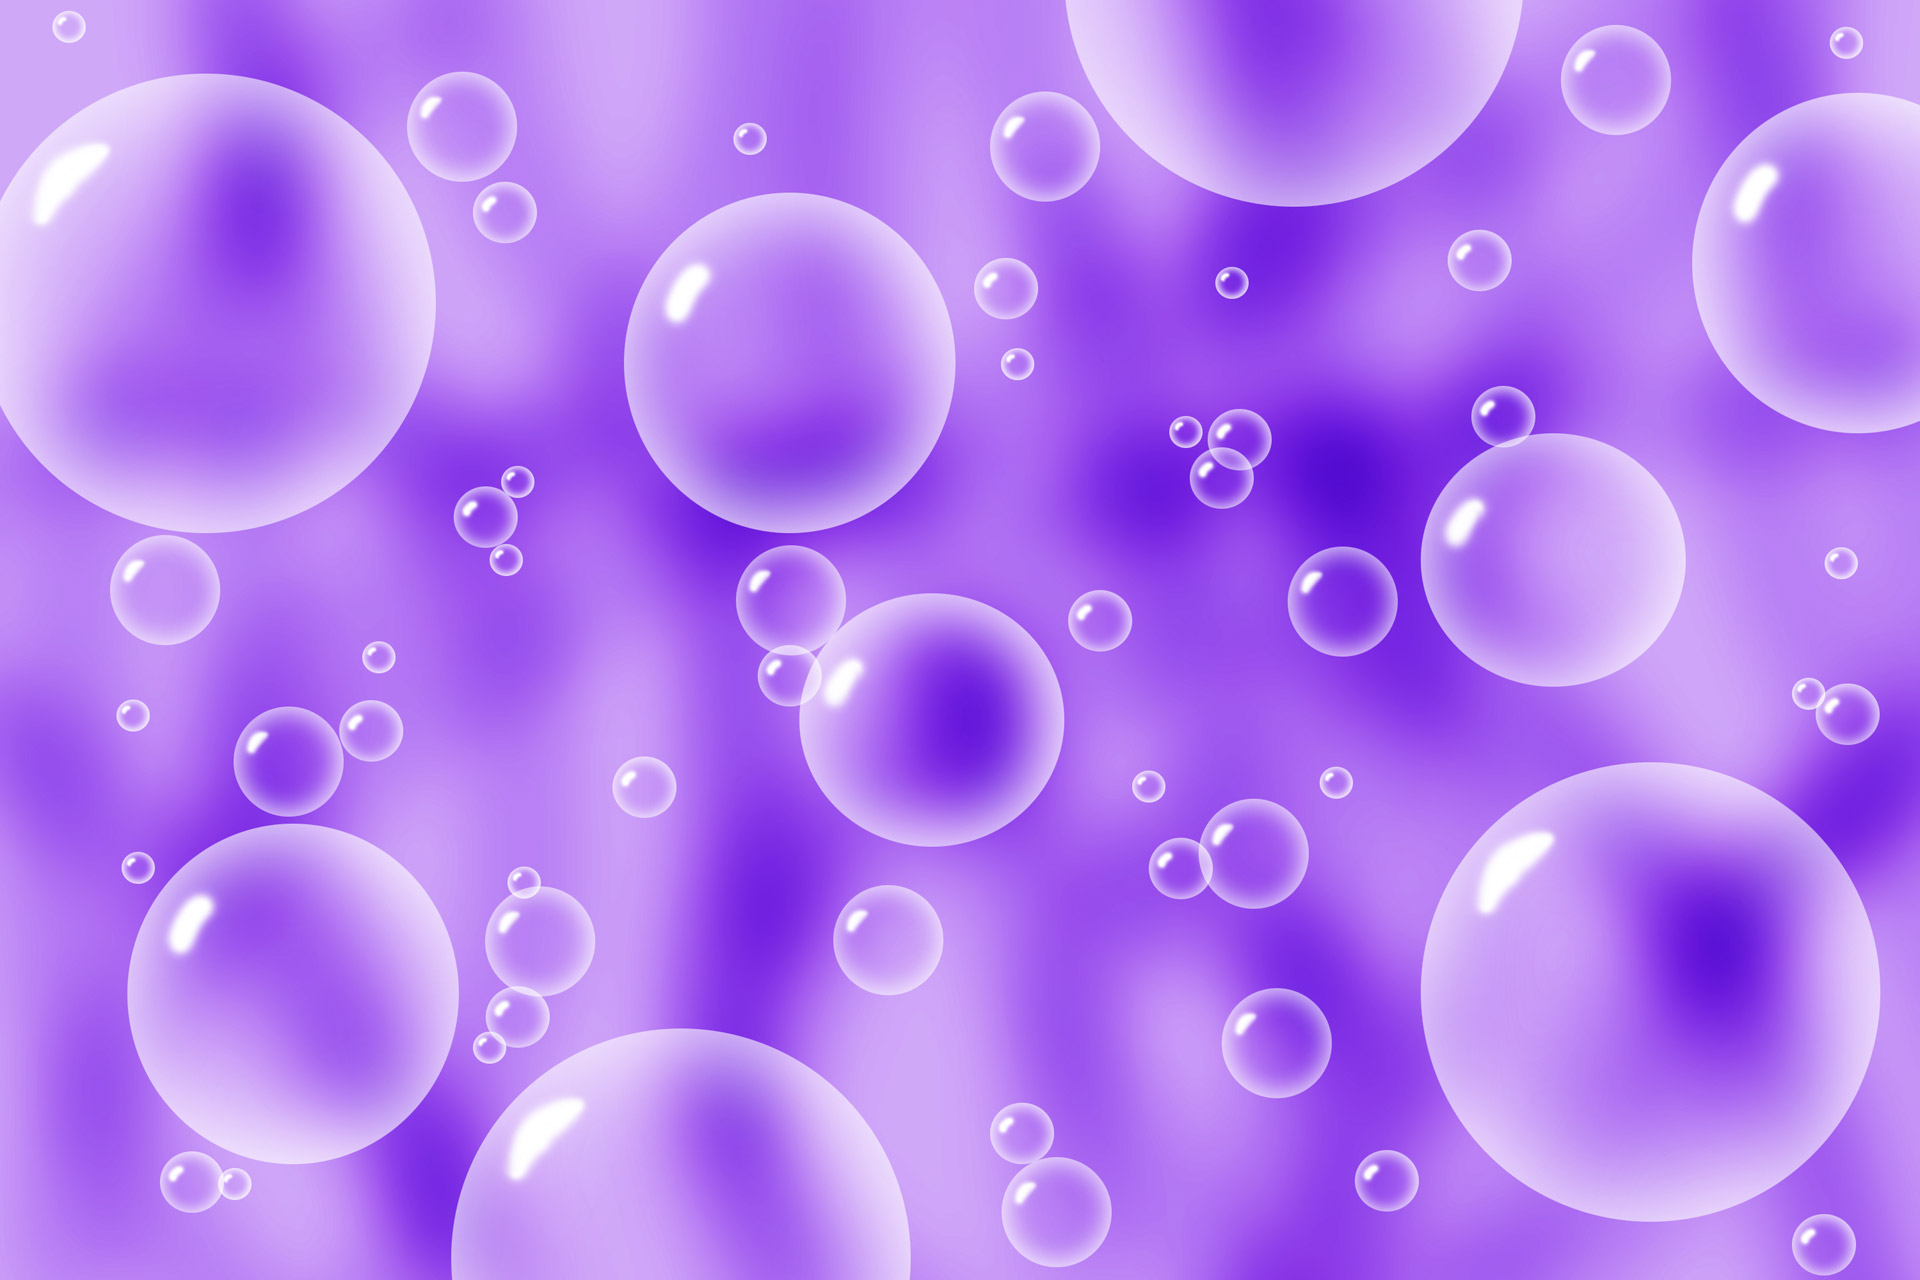 Bubbles On Purple Background Free Stock Photo - Public Domain Pictures